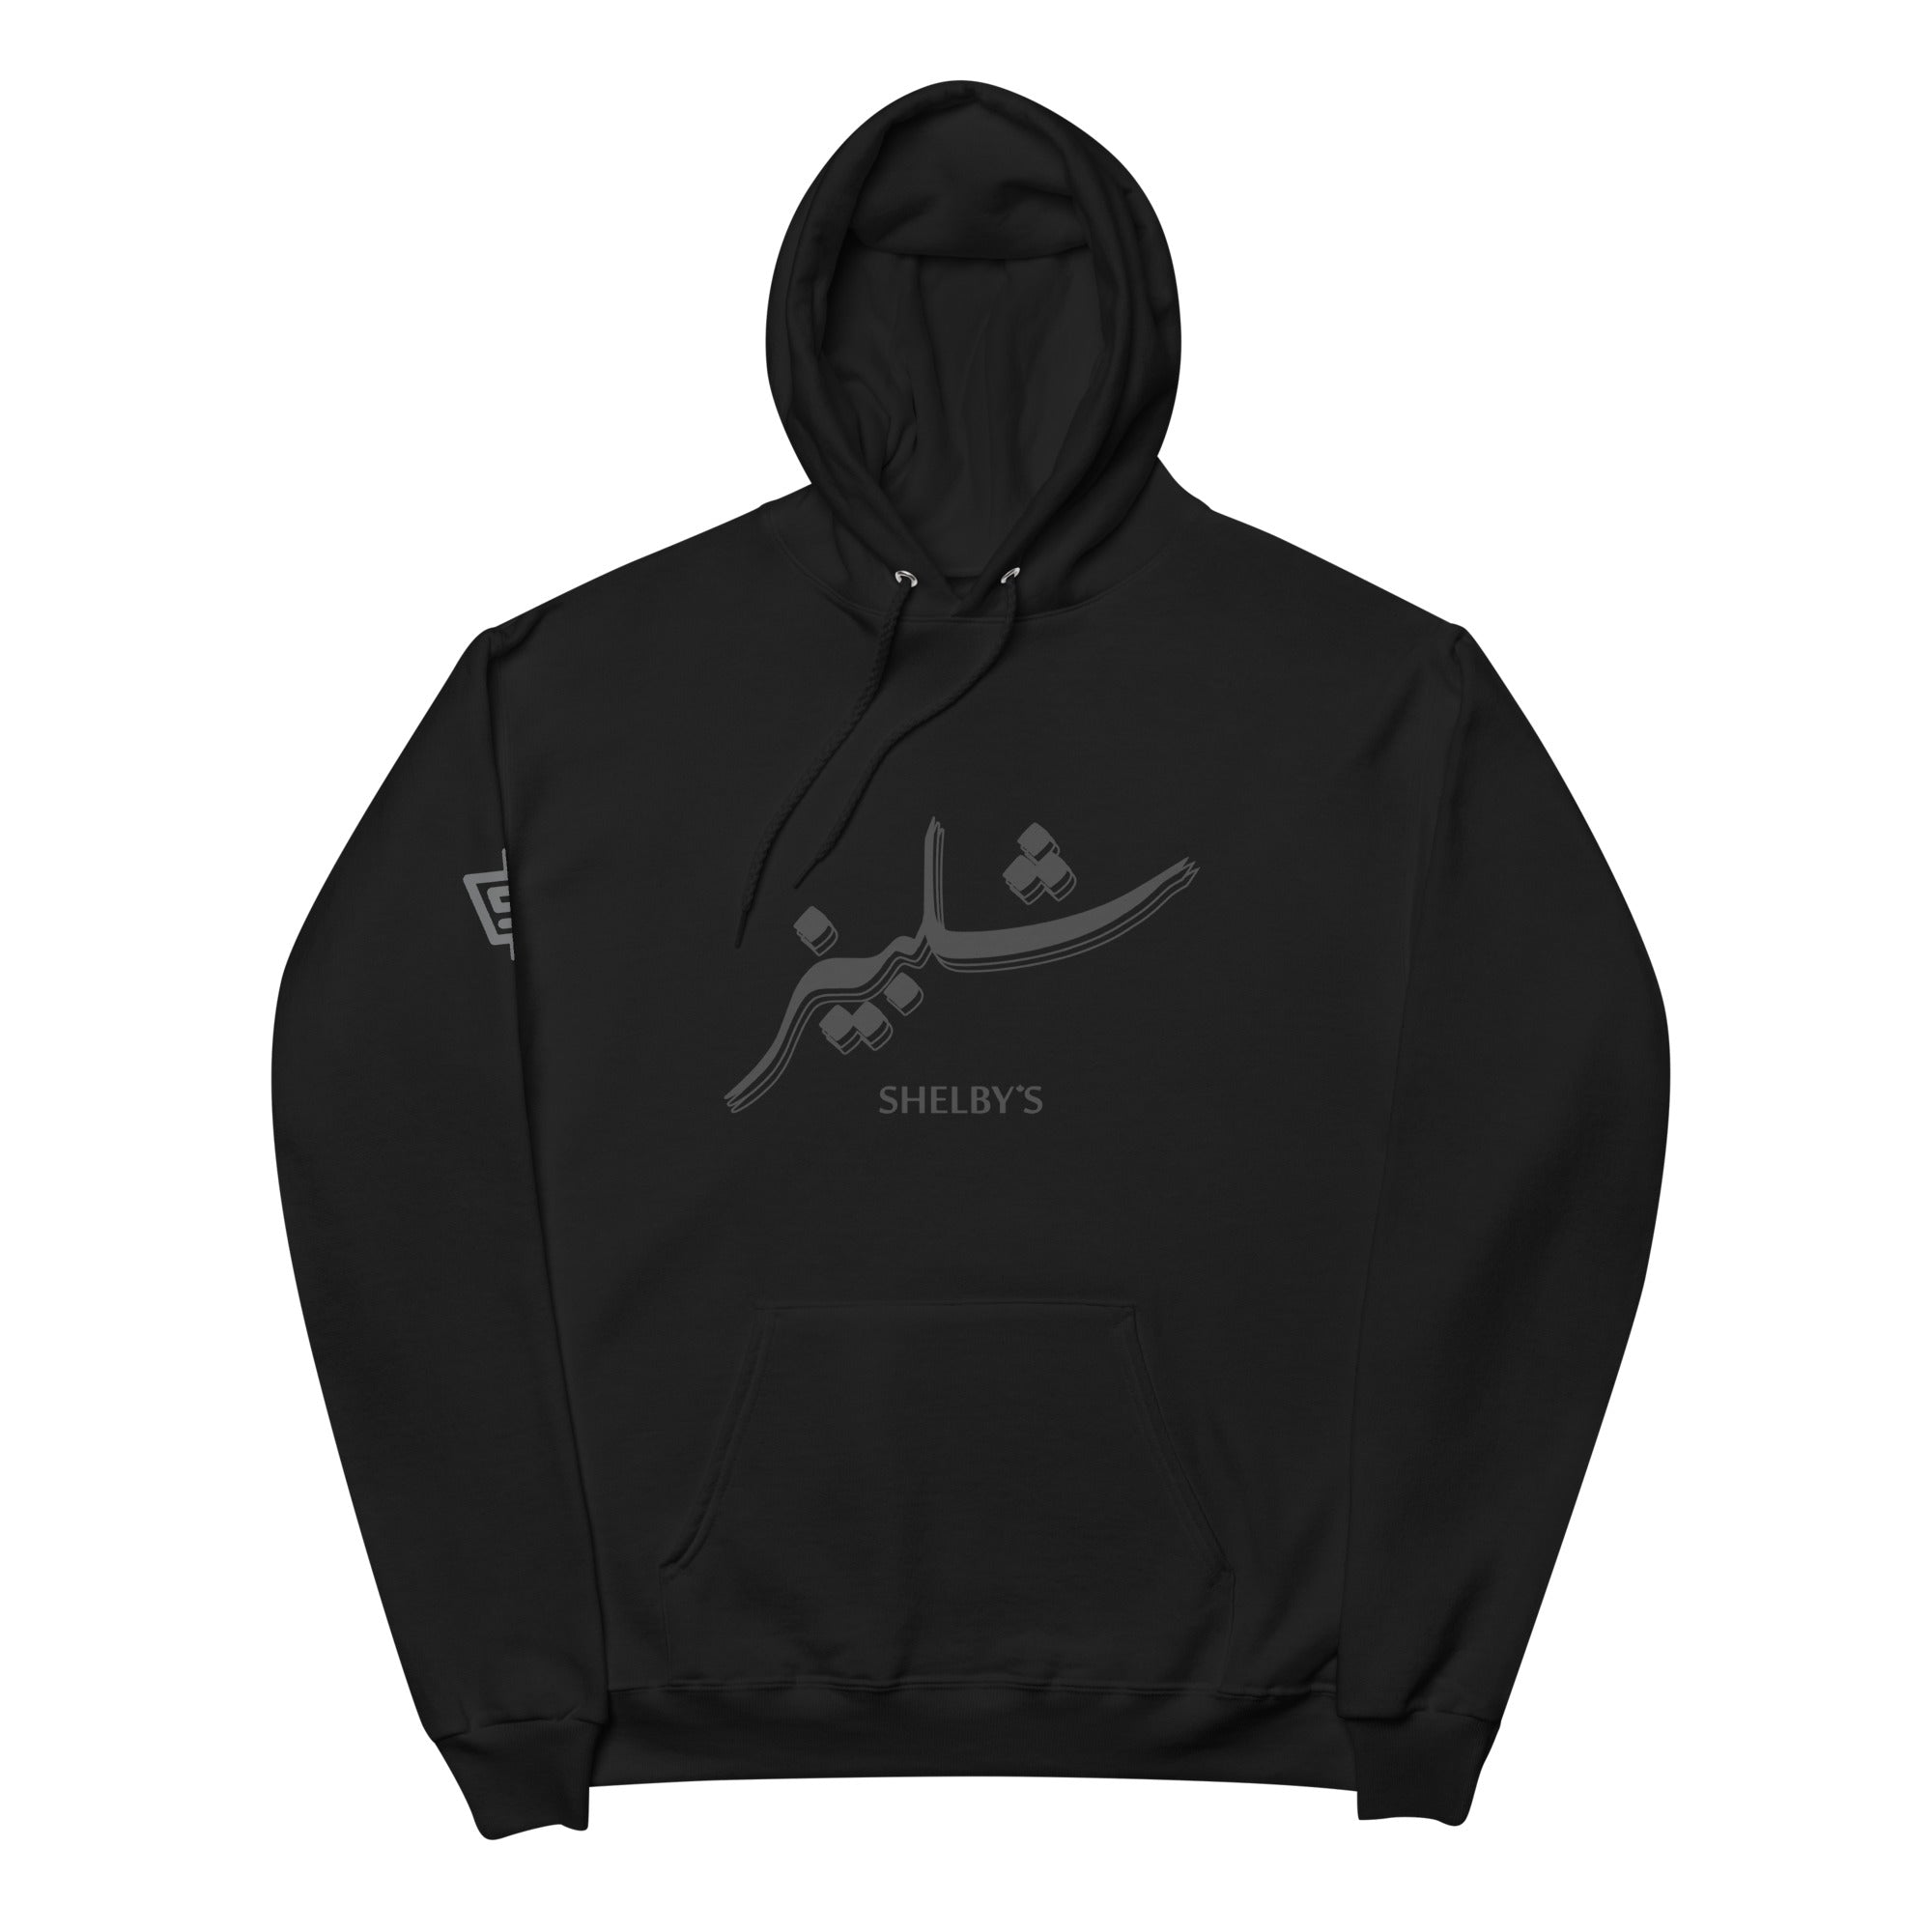 ishii clubman hoodie black Sサイズ - certbr.com